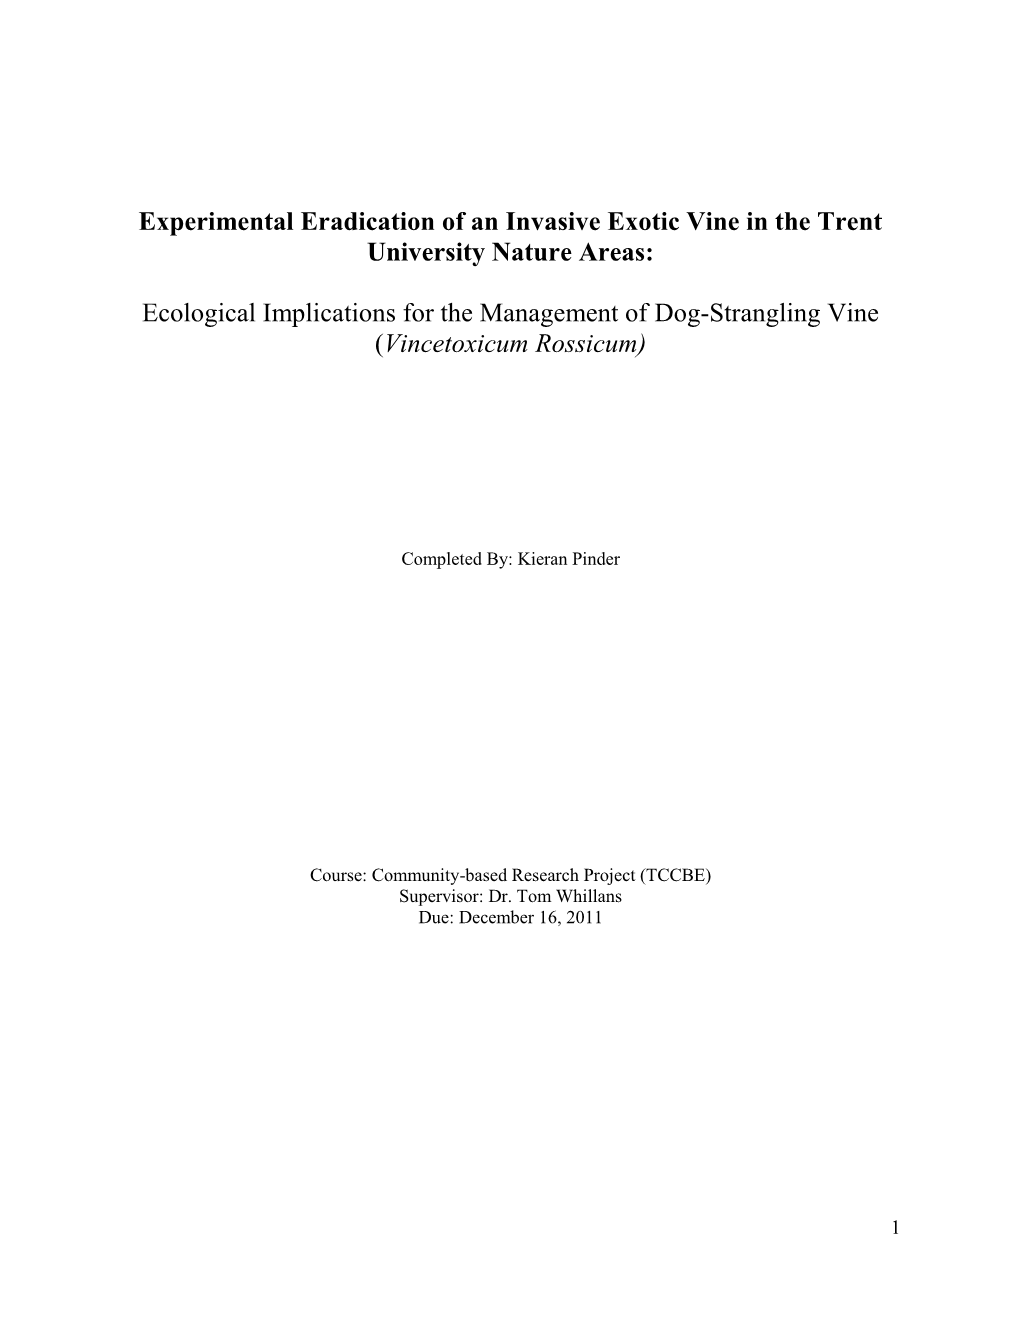 Ecological Implications for the Management of Dog-Strangling Vine (Vincetoxicum Rossicum)